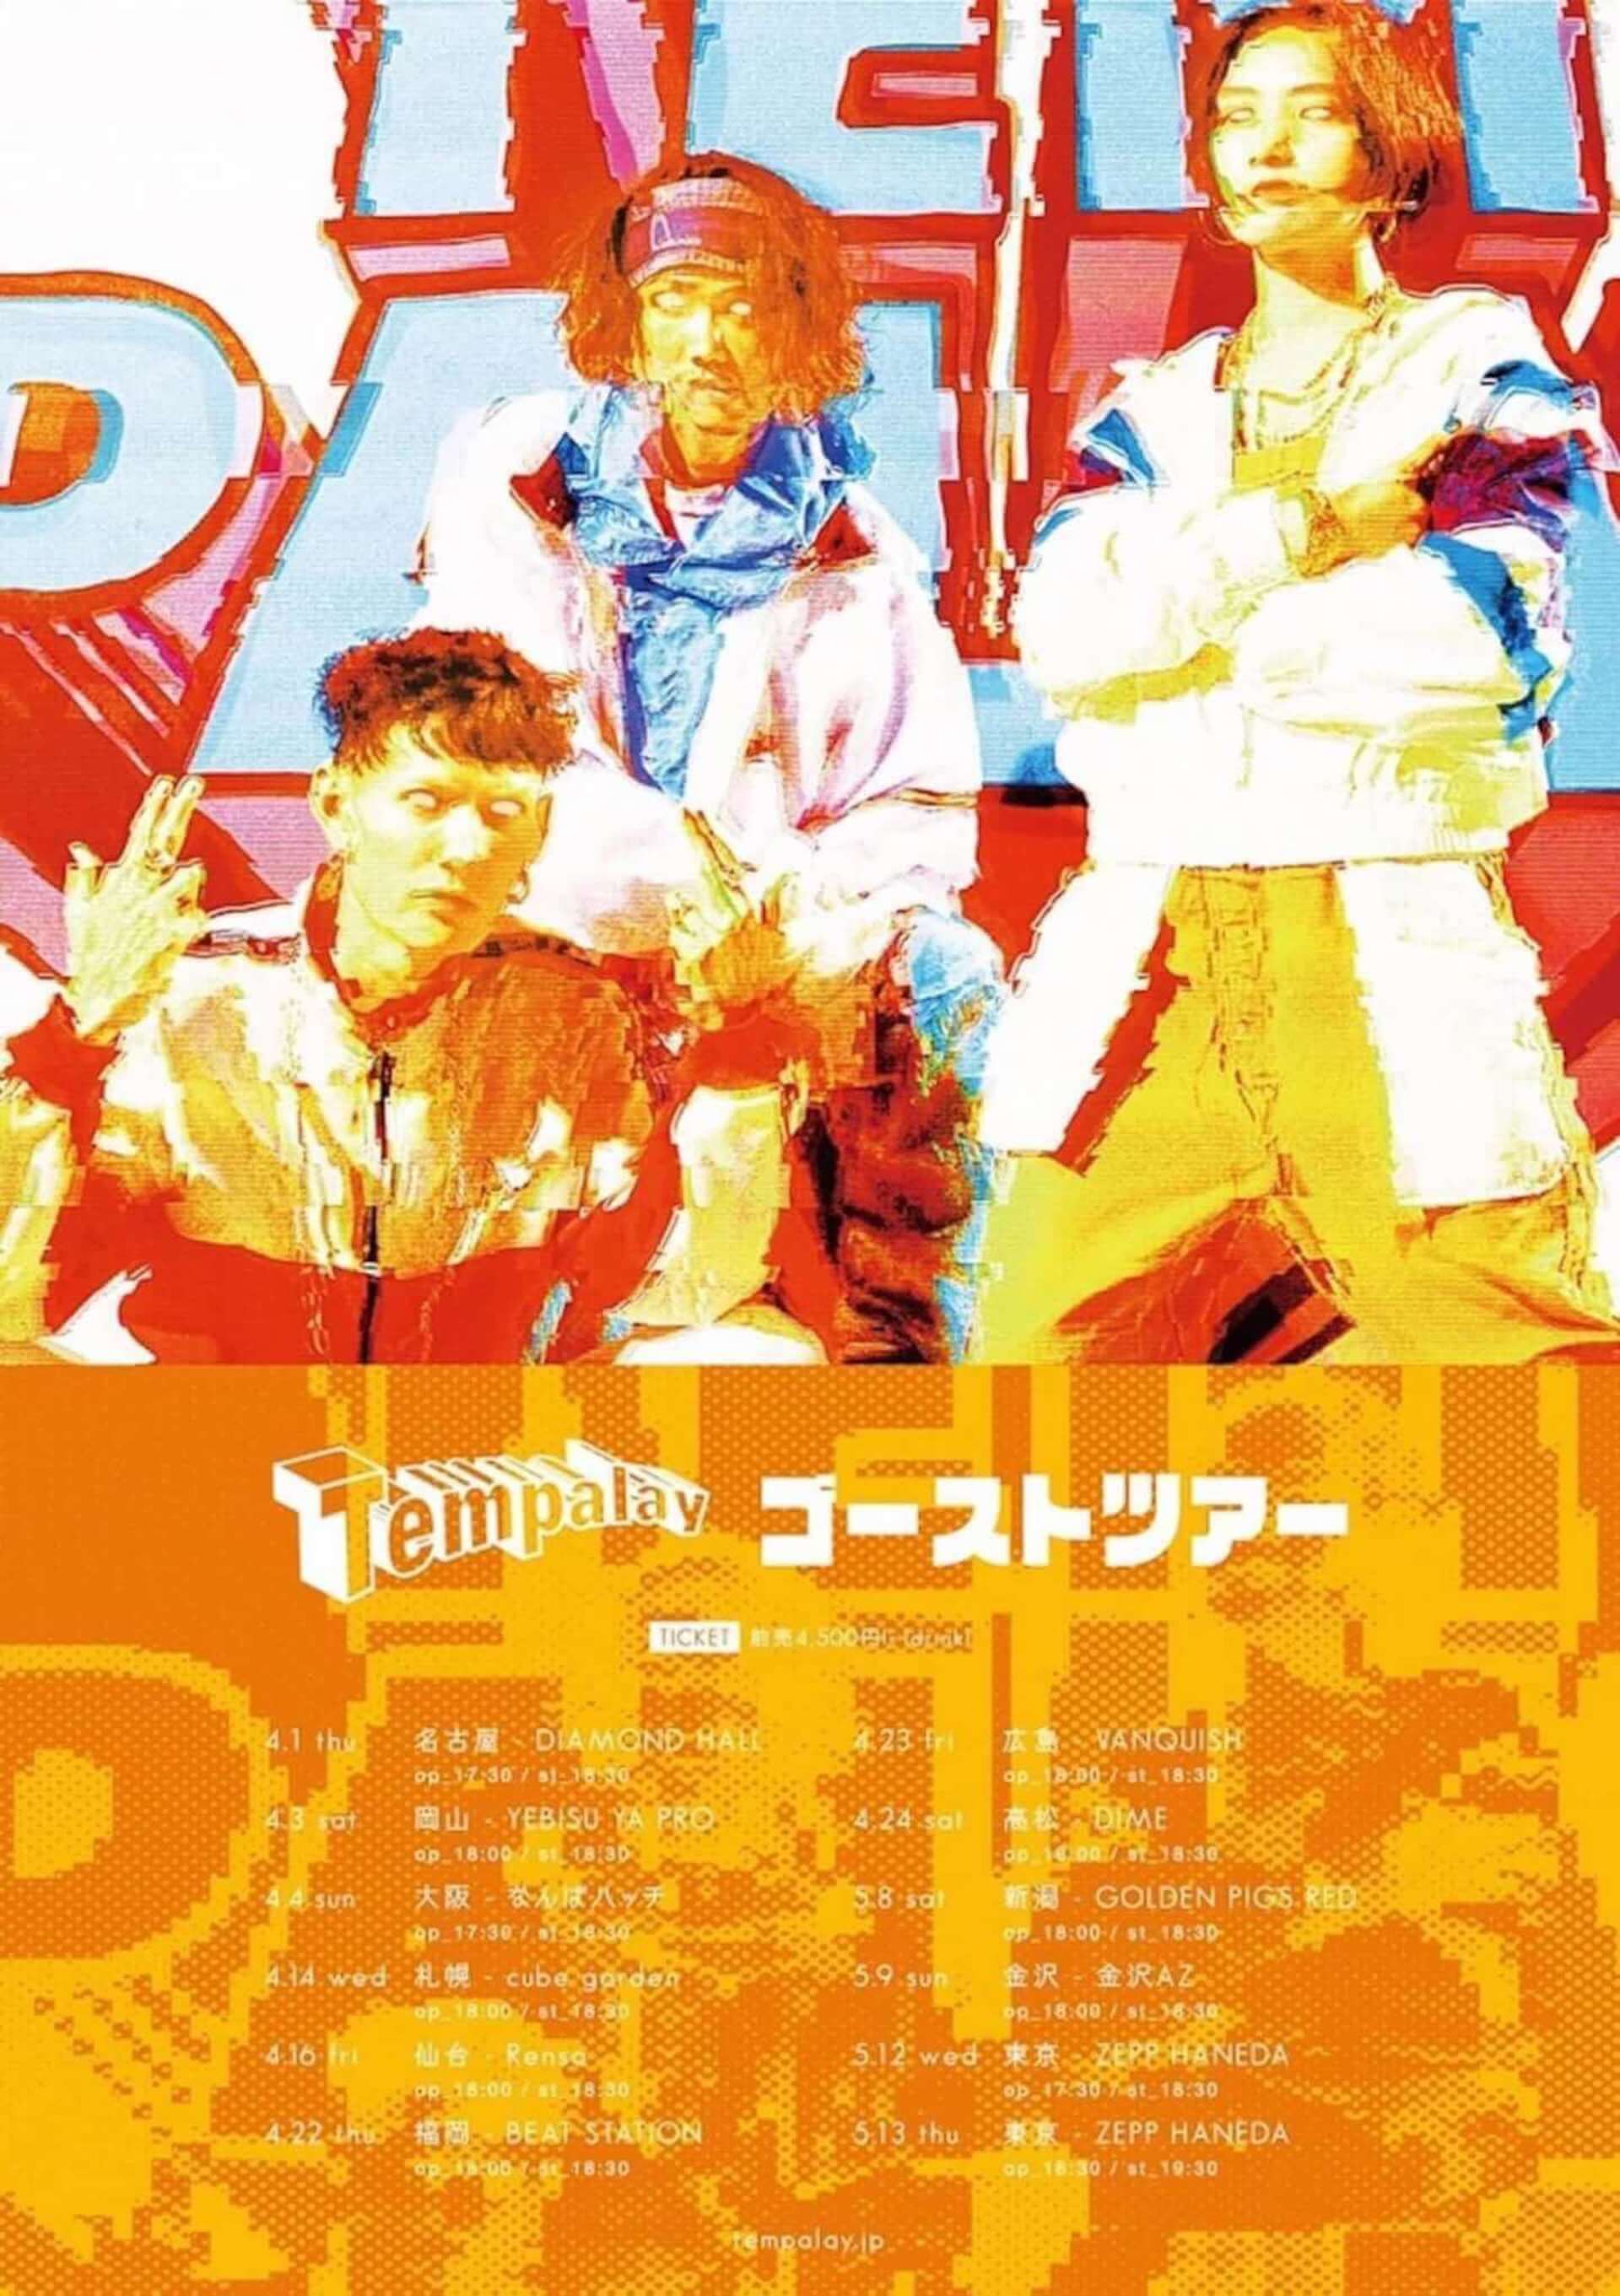 Tempalayが『Rolling Stone Japan』史上初のW表紙仕様でBACK COVERに登場！最新作『ゴーストアルバム』の制作インタビューも収録 music210322_tempalay_2-1920x2721